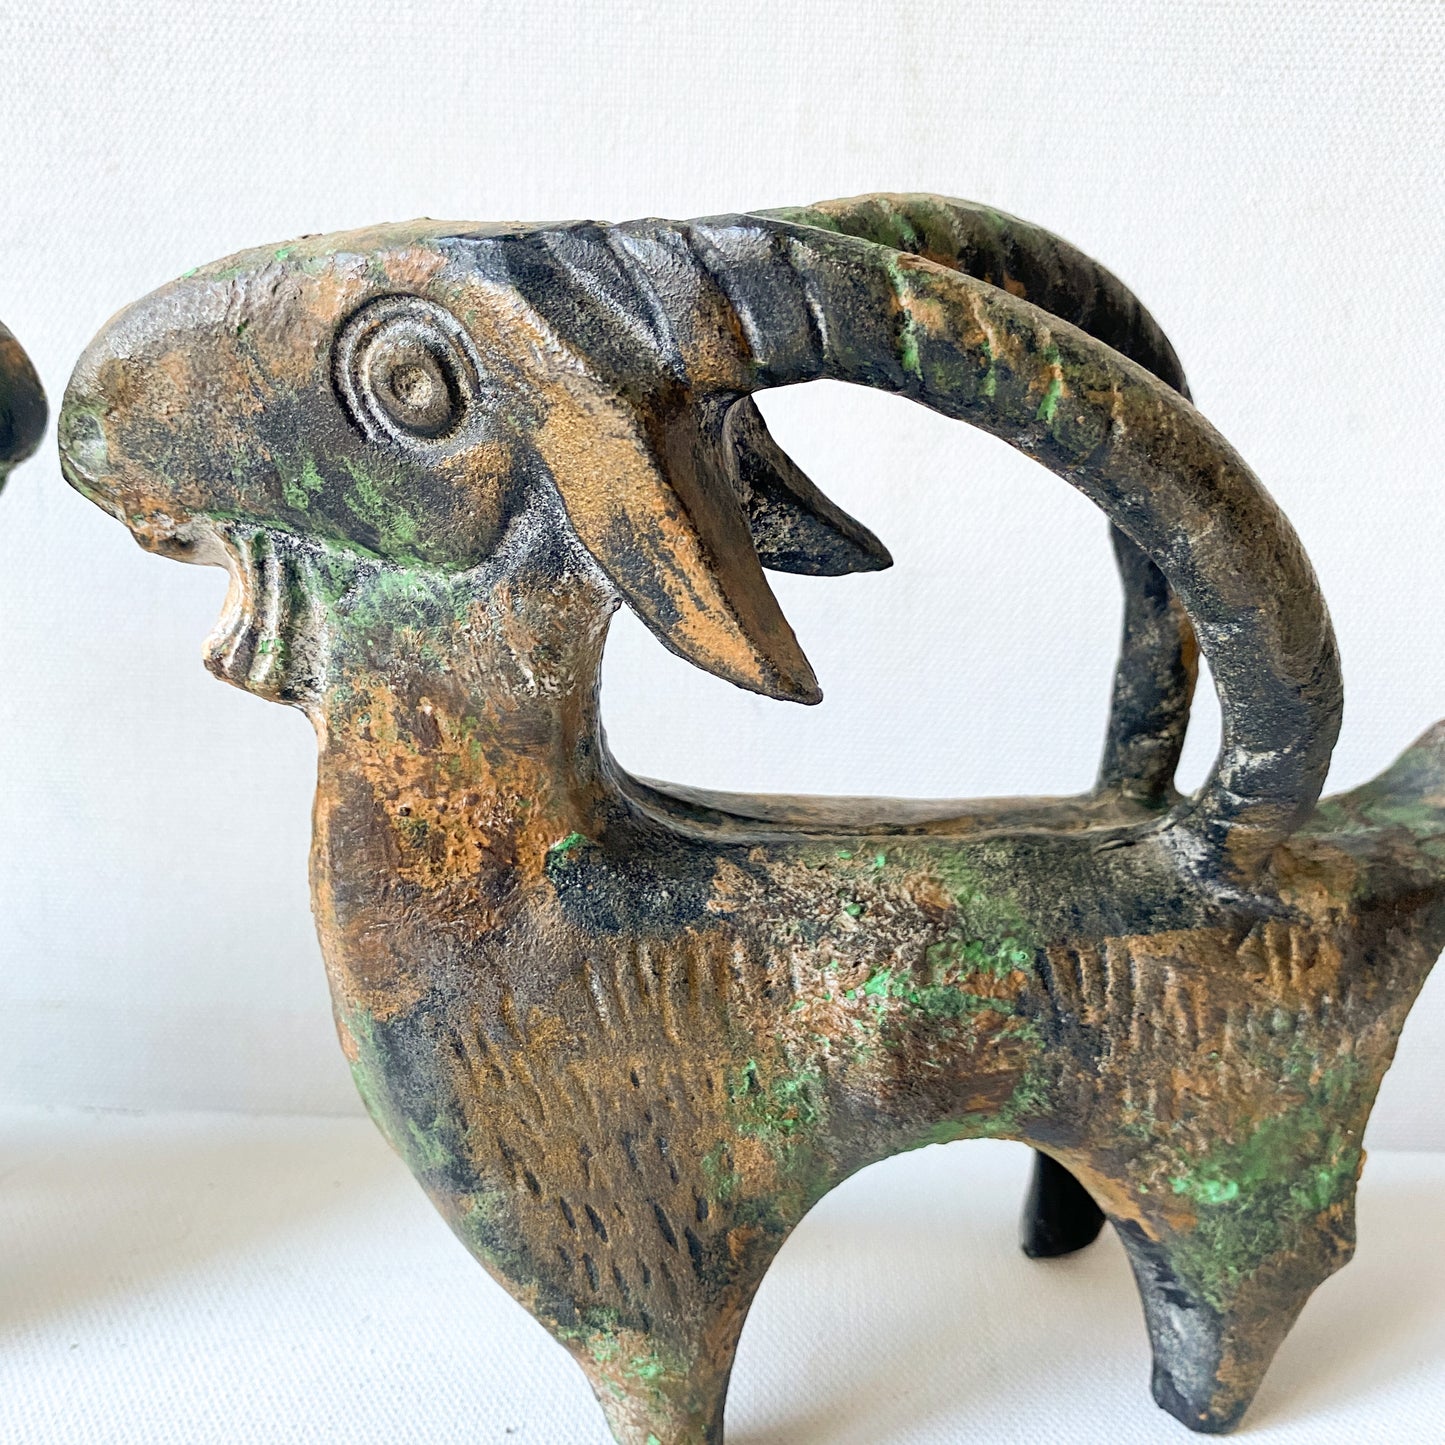 Vintage Cast Iron Ibex Sculptures (Rams, or Mountain Goat), Doorstop, Bookends